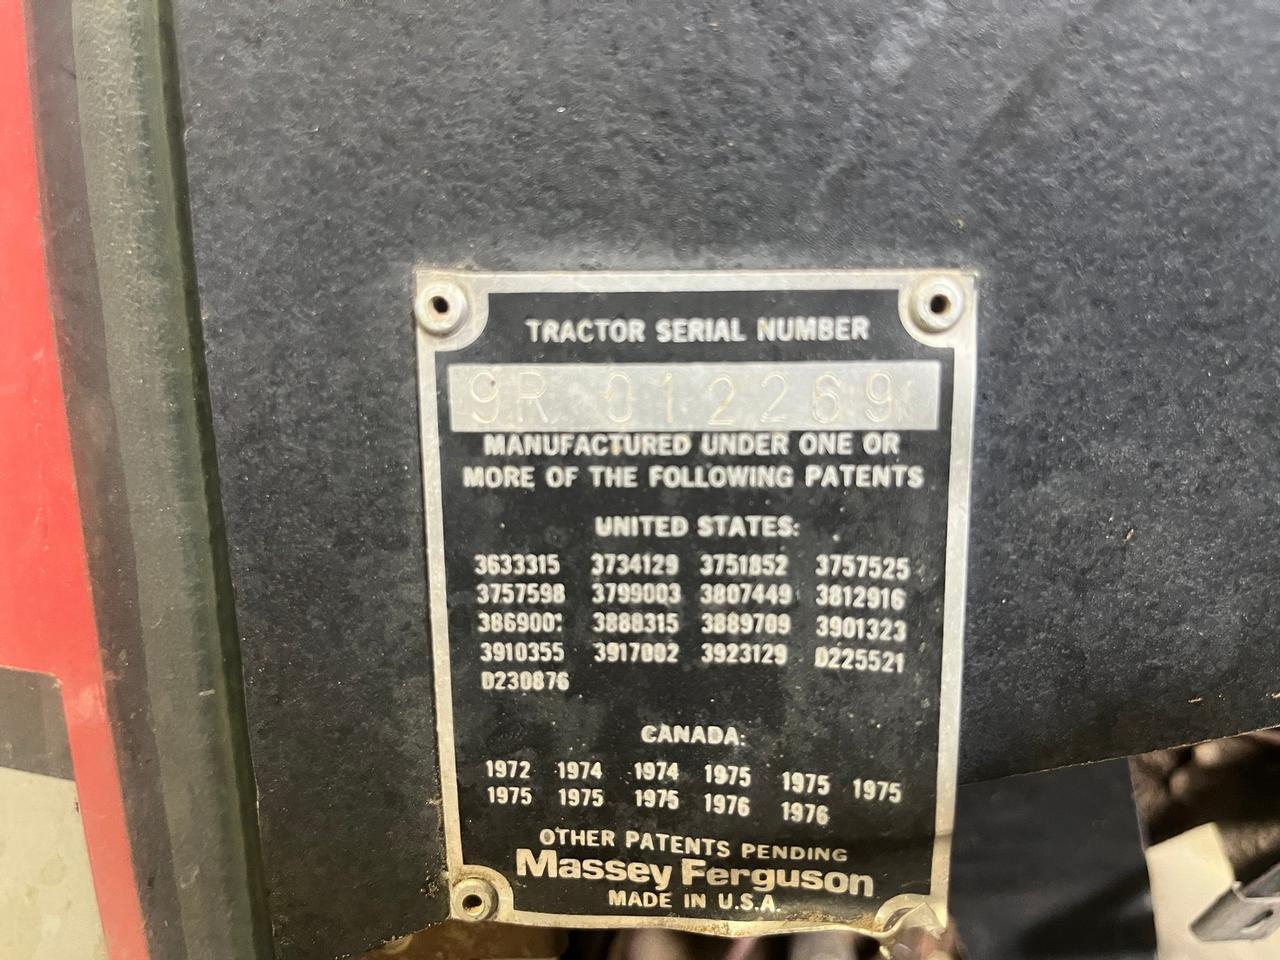 Massey Ferguson 2675 Tractor